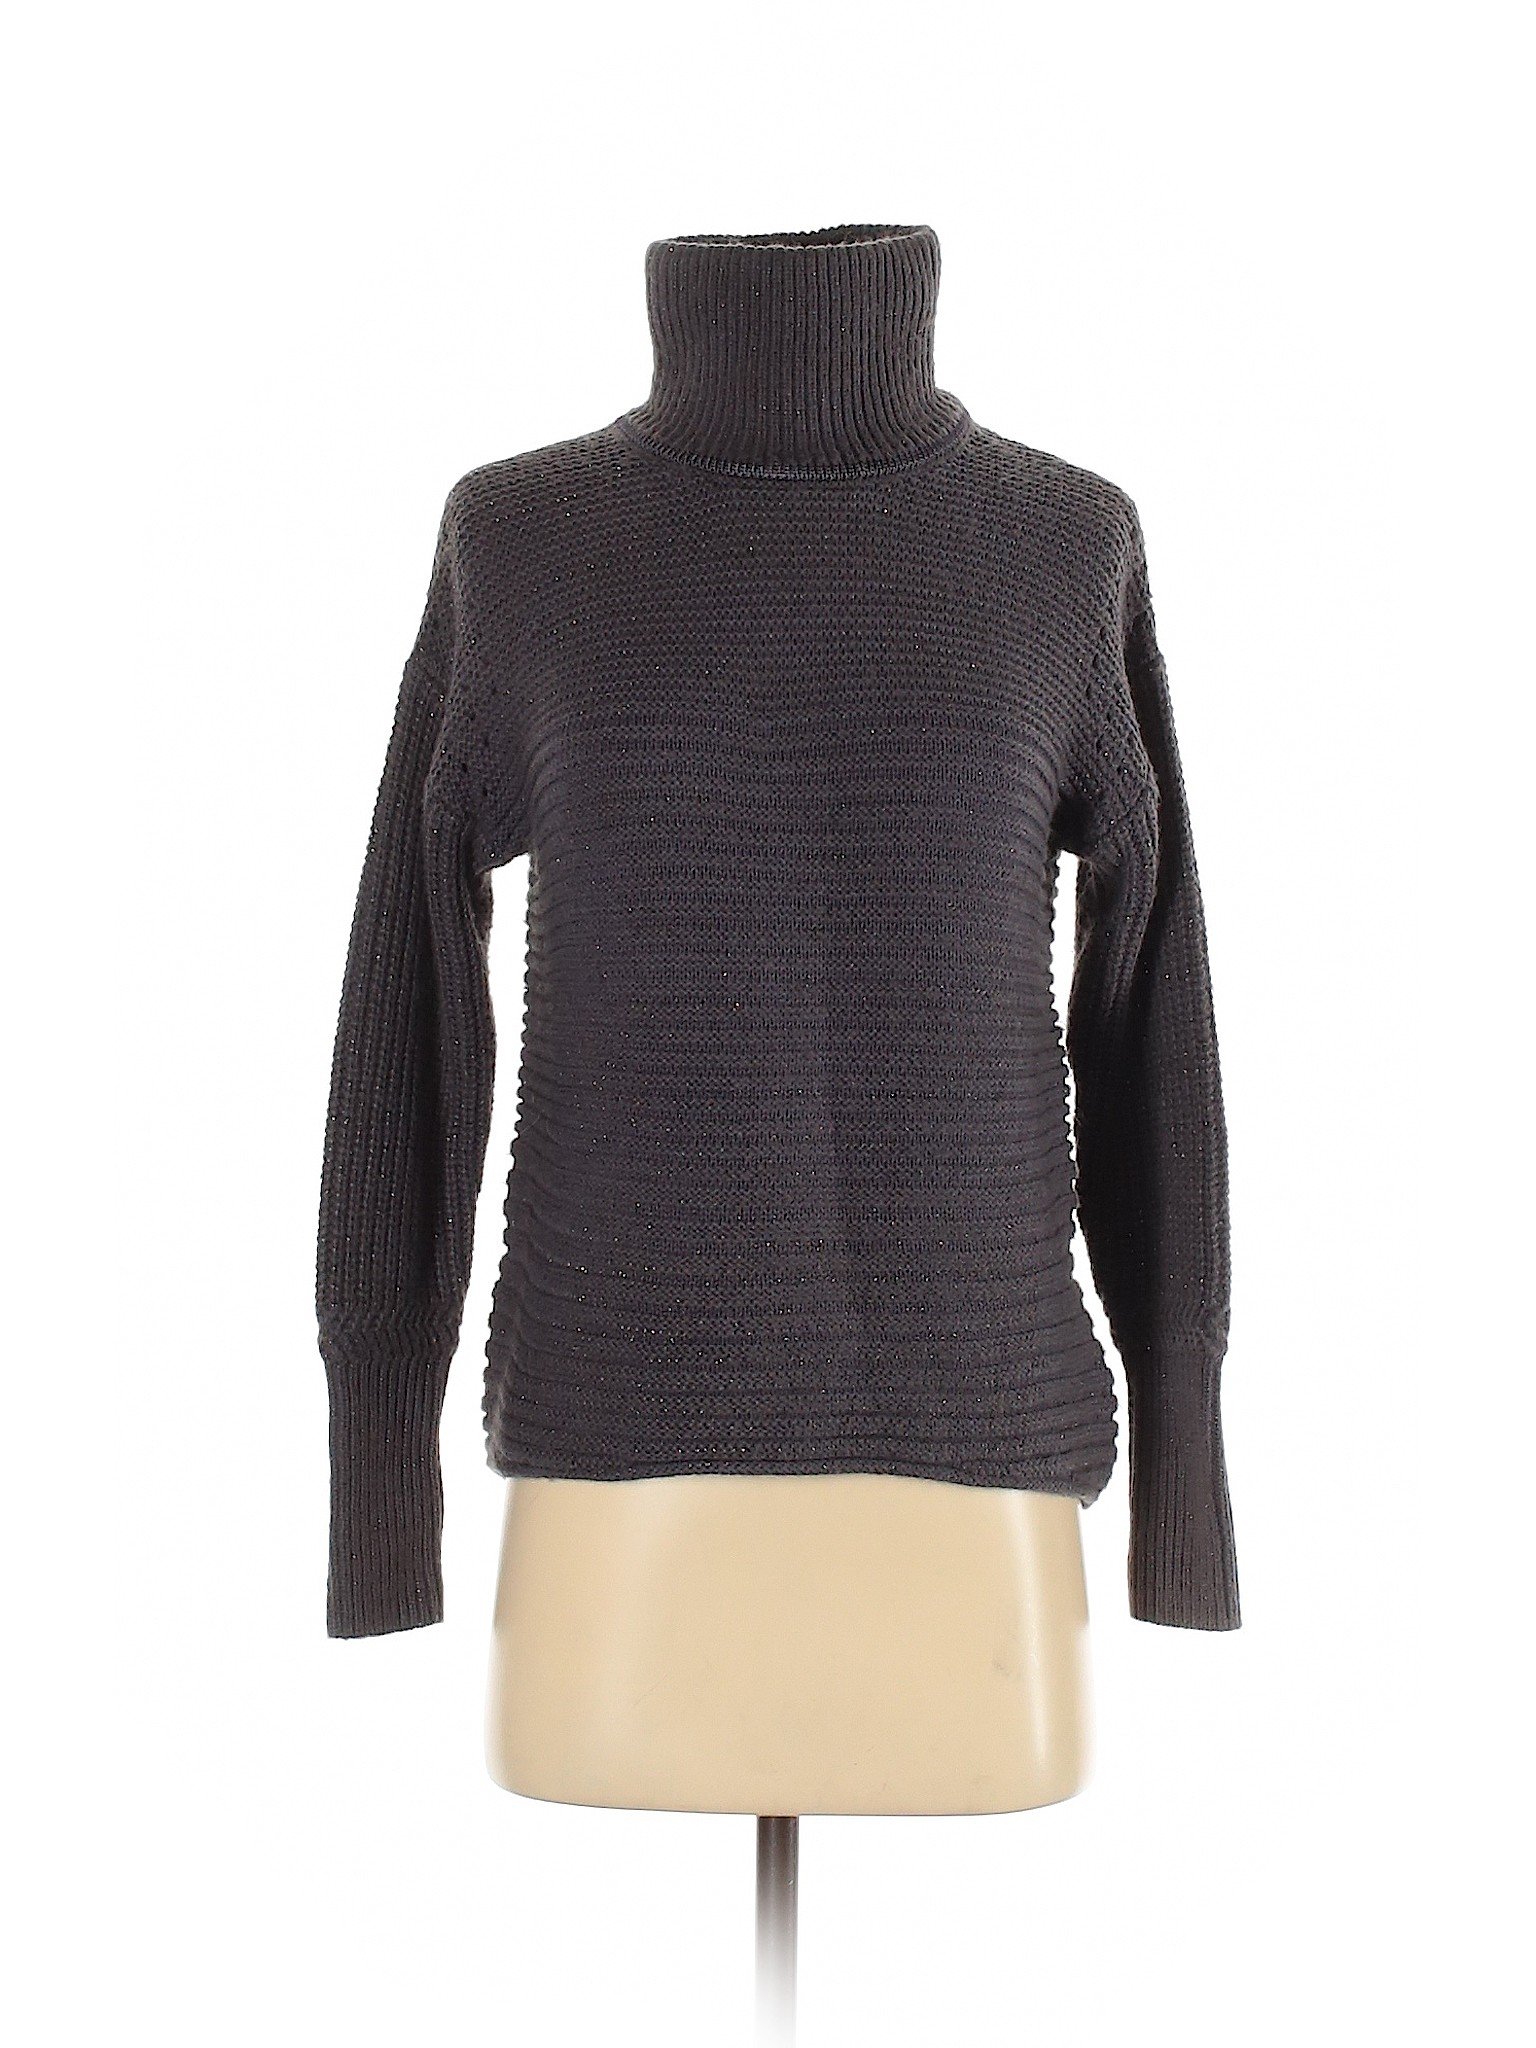 Simply Vera Vera Wang Women Gray Turtleneck Sweater XS | eBay